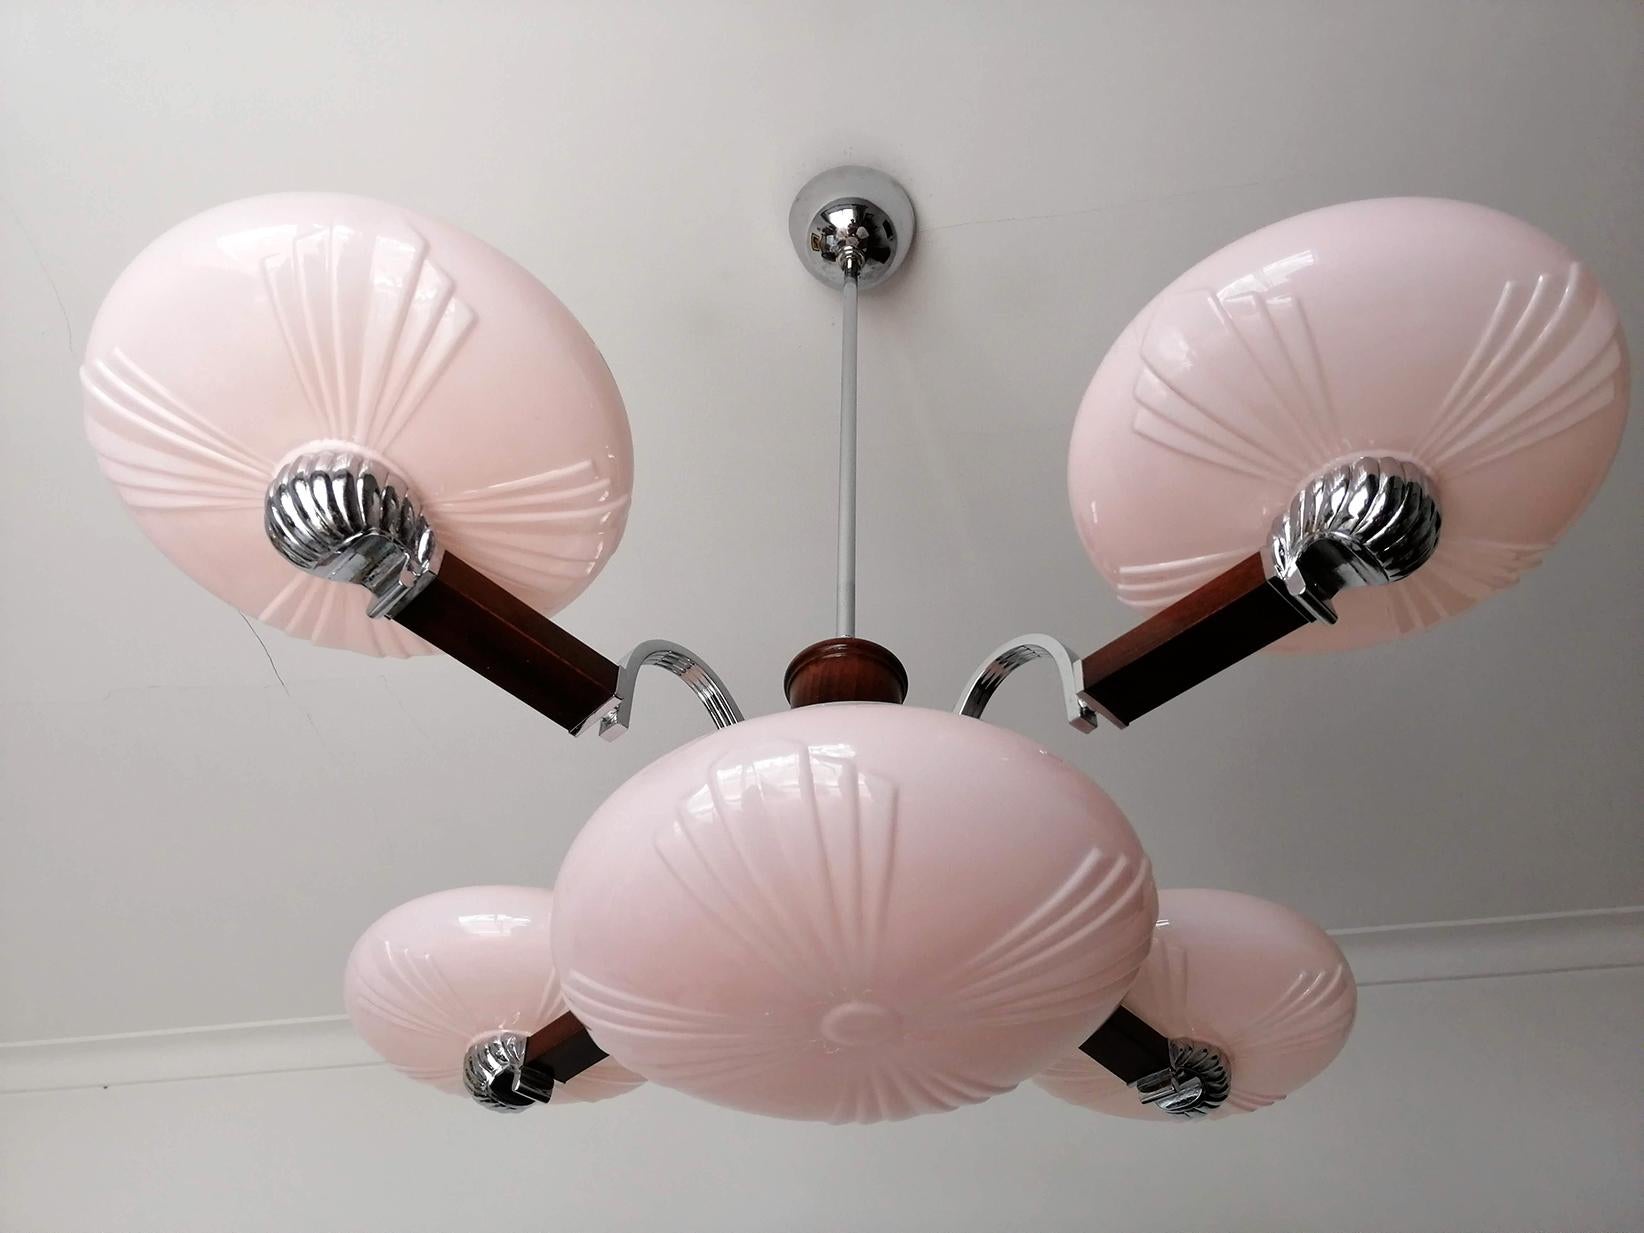 Original French Art Deco modernist ceiling lamp, pink opaline glass shades Bauhaus chandelier
Materials: Opaline glass/ wood/ chrome
Measures:
Diameter: 31.5 in / 90 cm
Height: 35 in / 88 cm 
Glass shades: 10 in / 25 cm 
Glass bowl; 13 in / 33